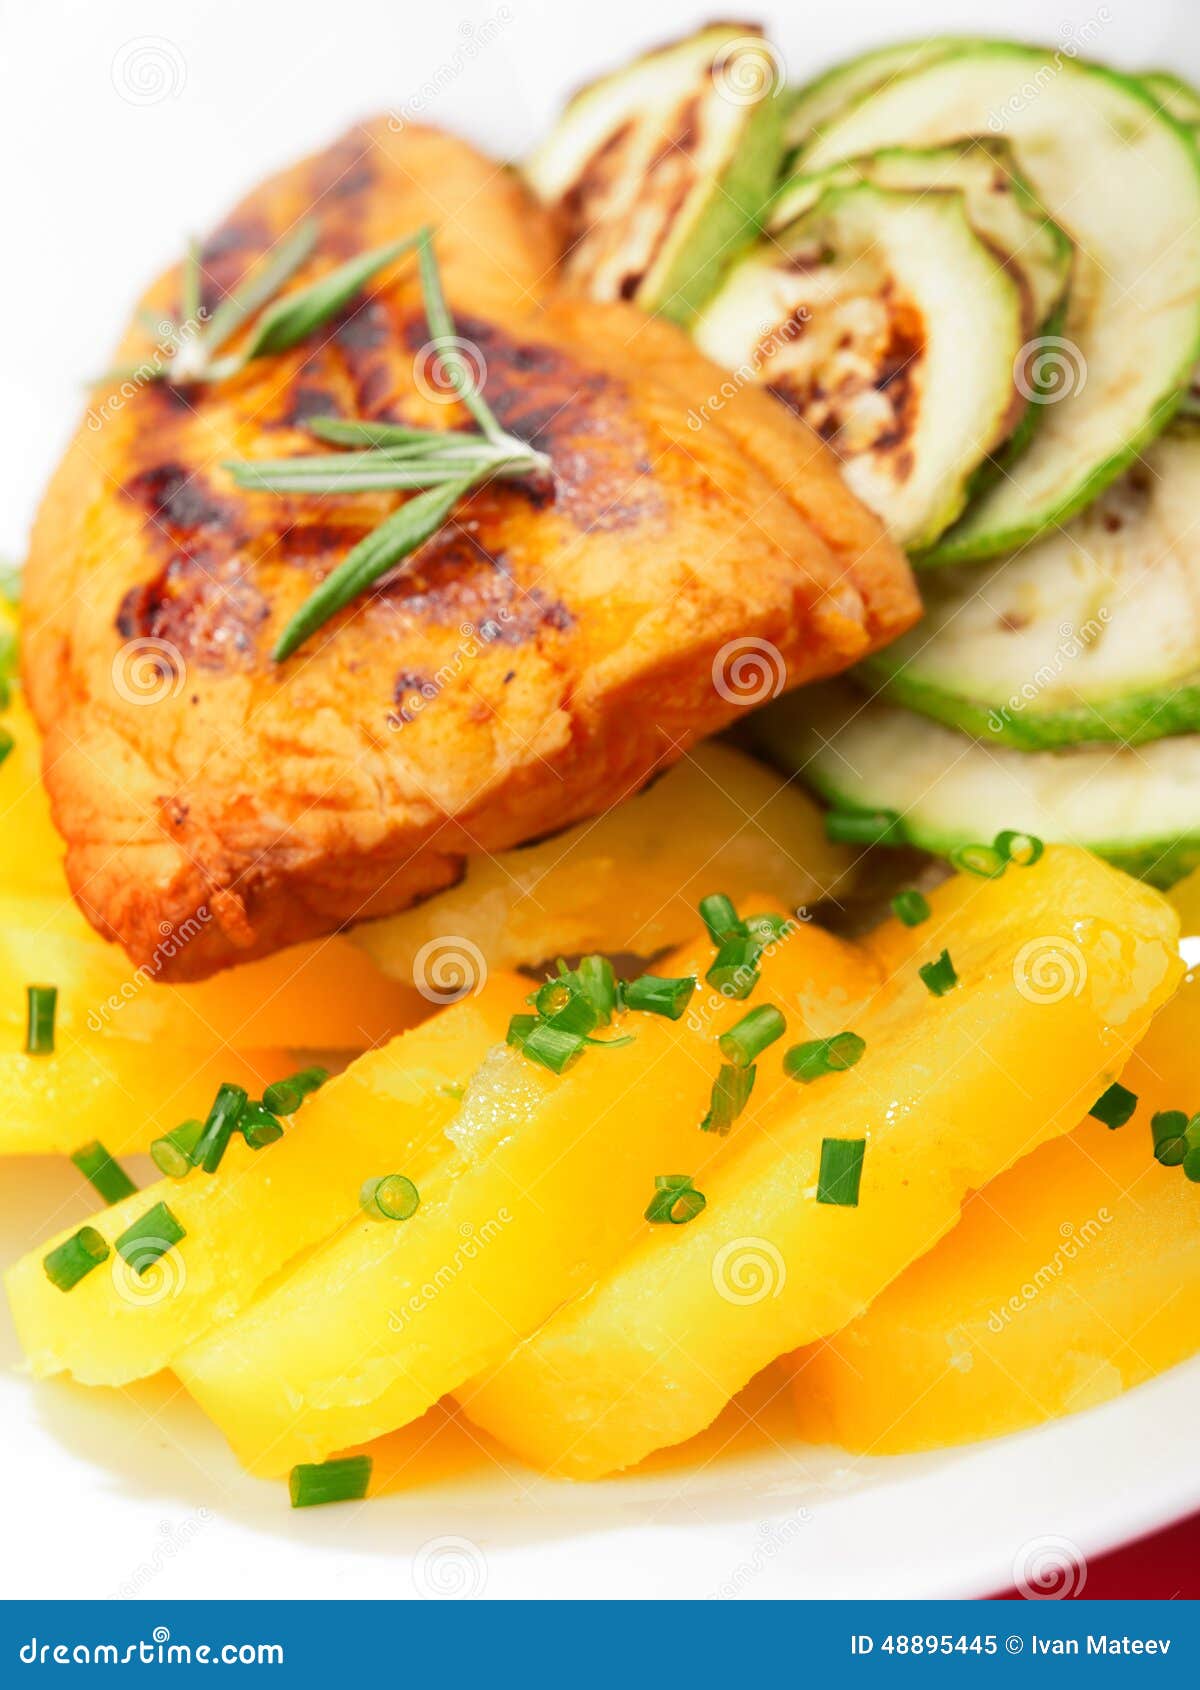 Baked Whitefish with Orange Juice Stock Image - Image of seafood, drink ...